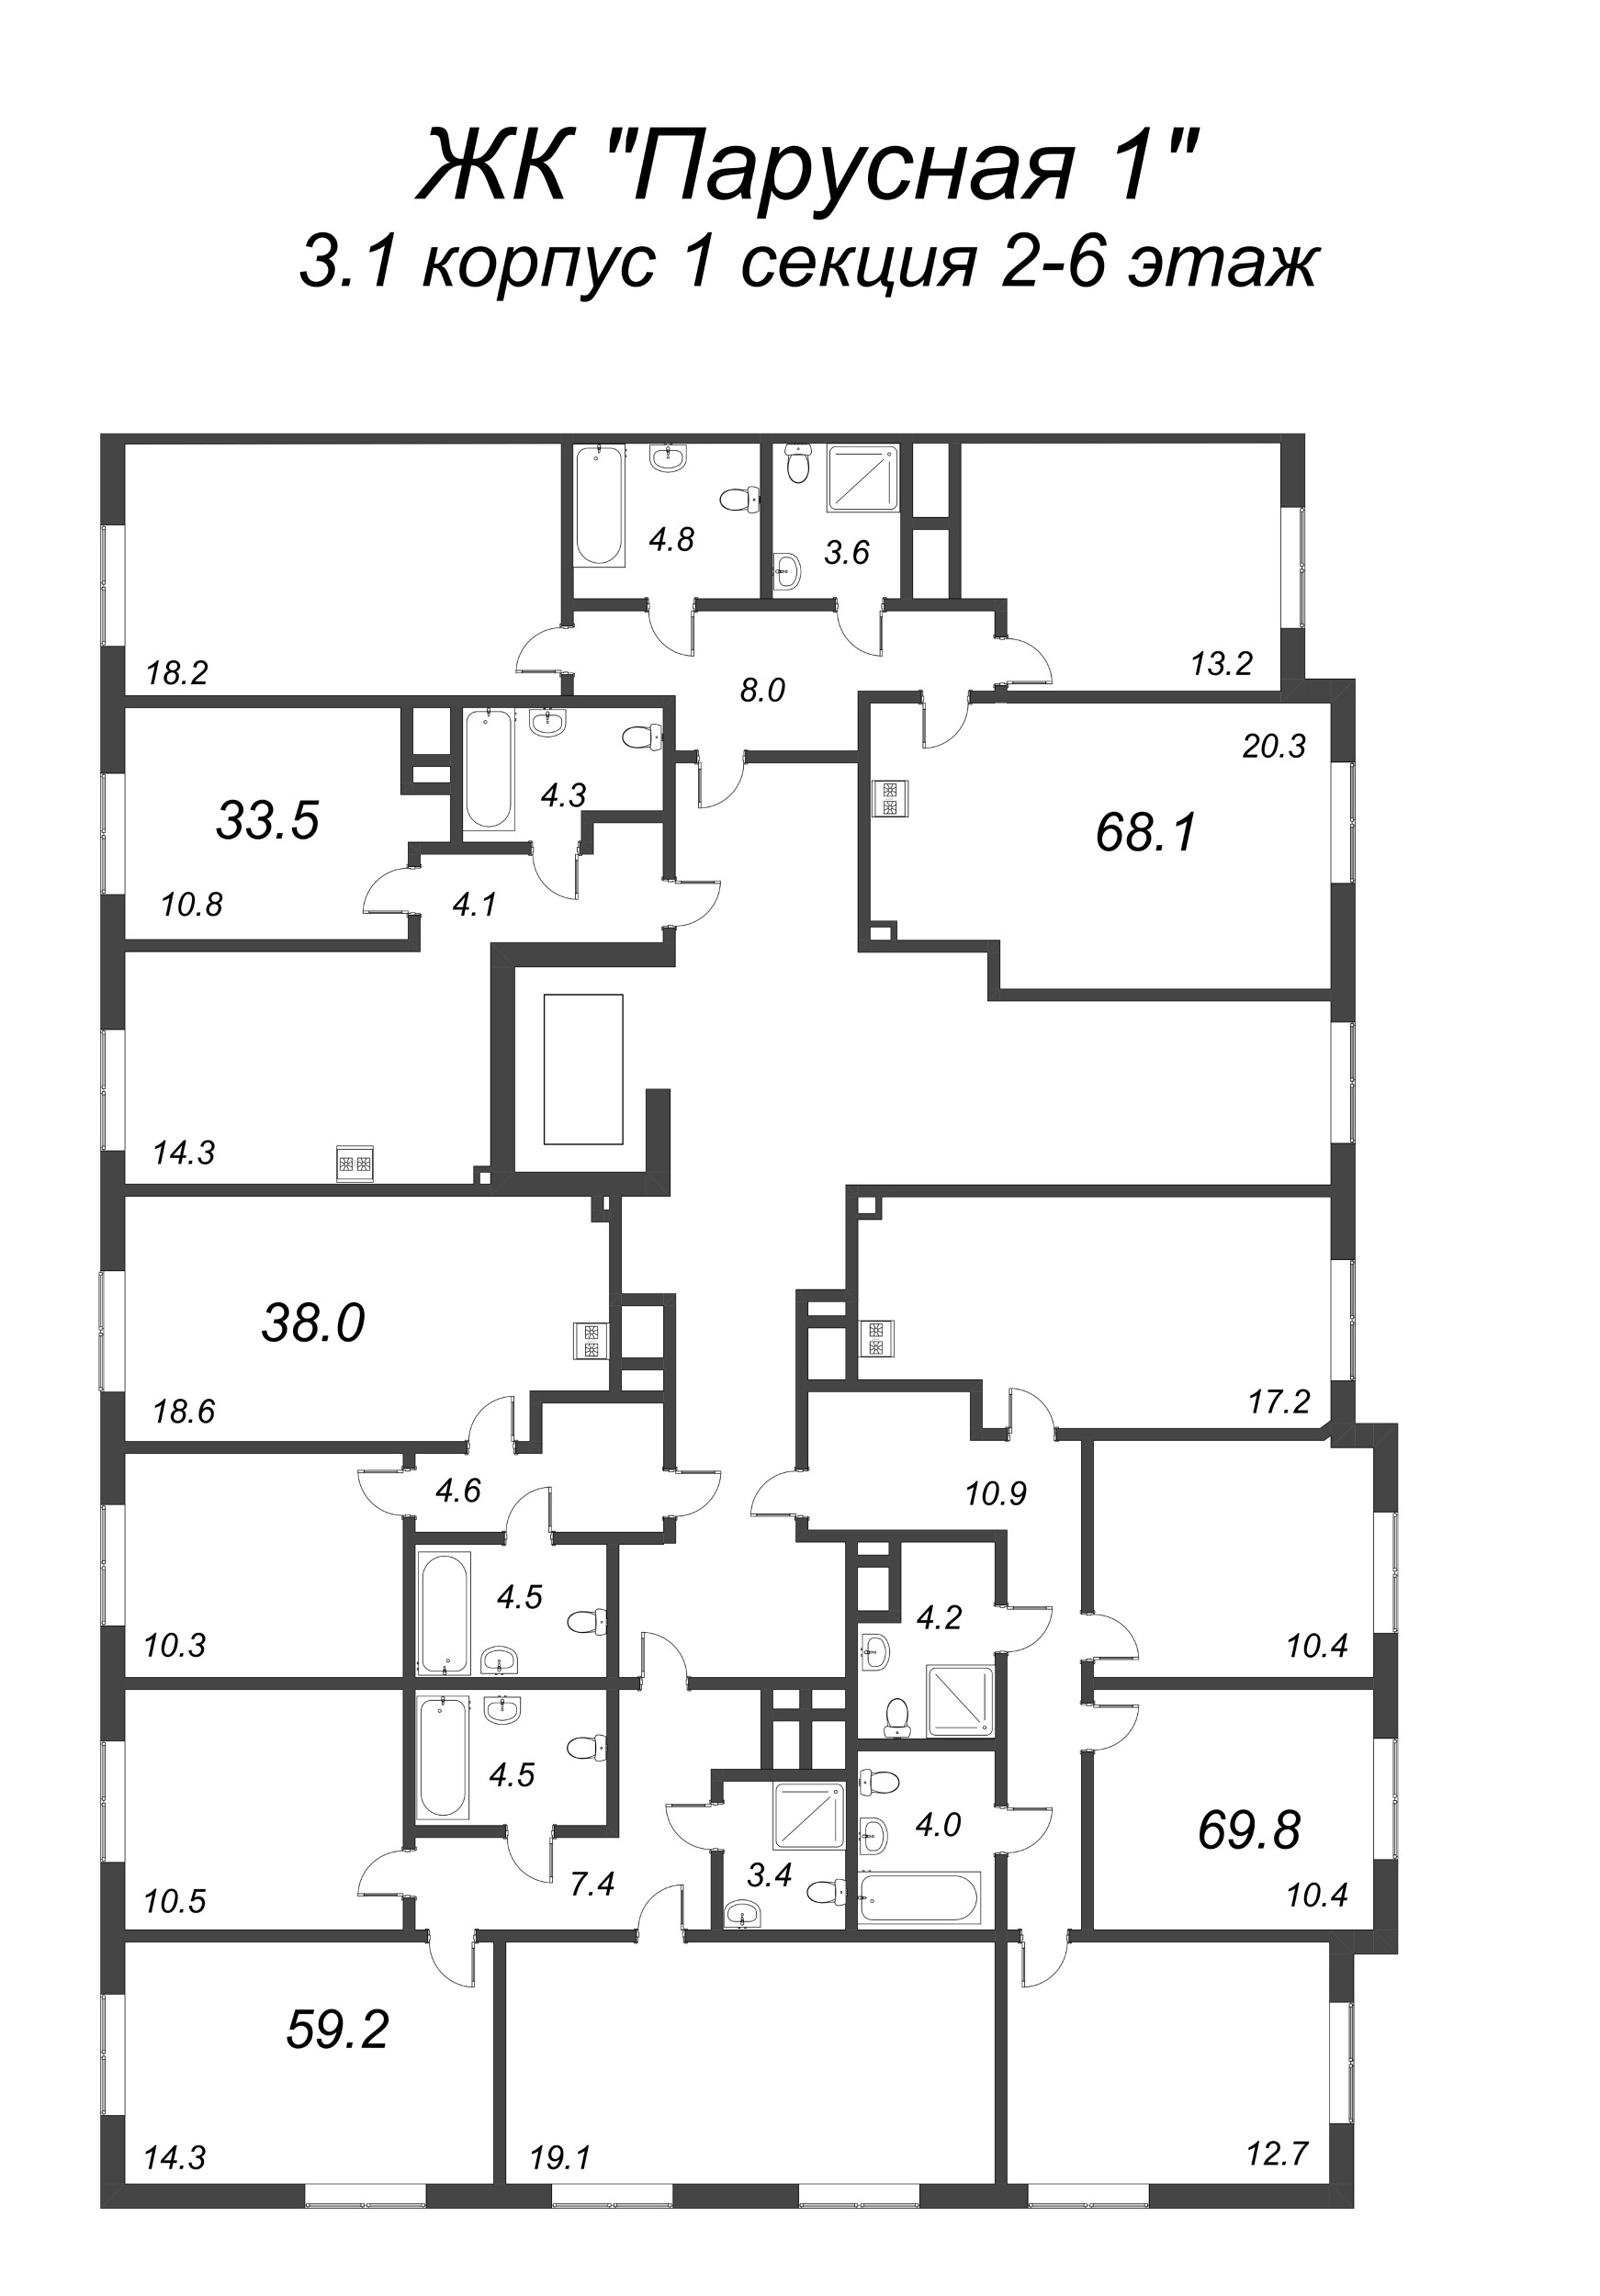 3-комнатная (Евро) квартира, 59.2 м² - планировка этажа